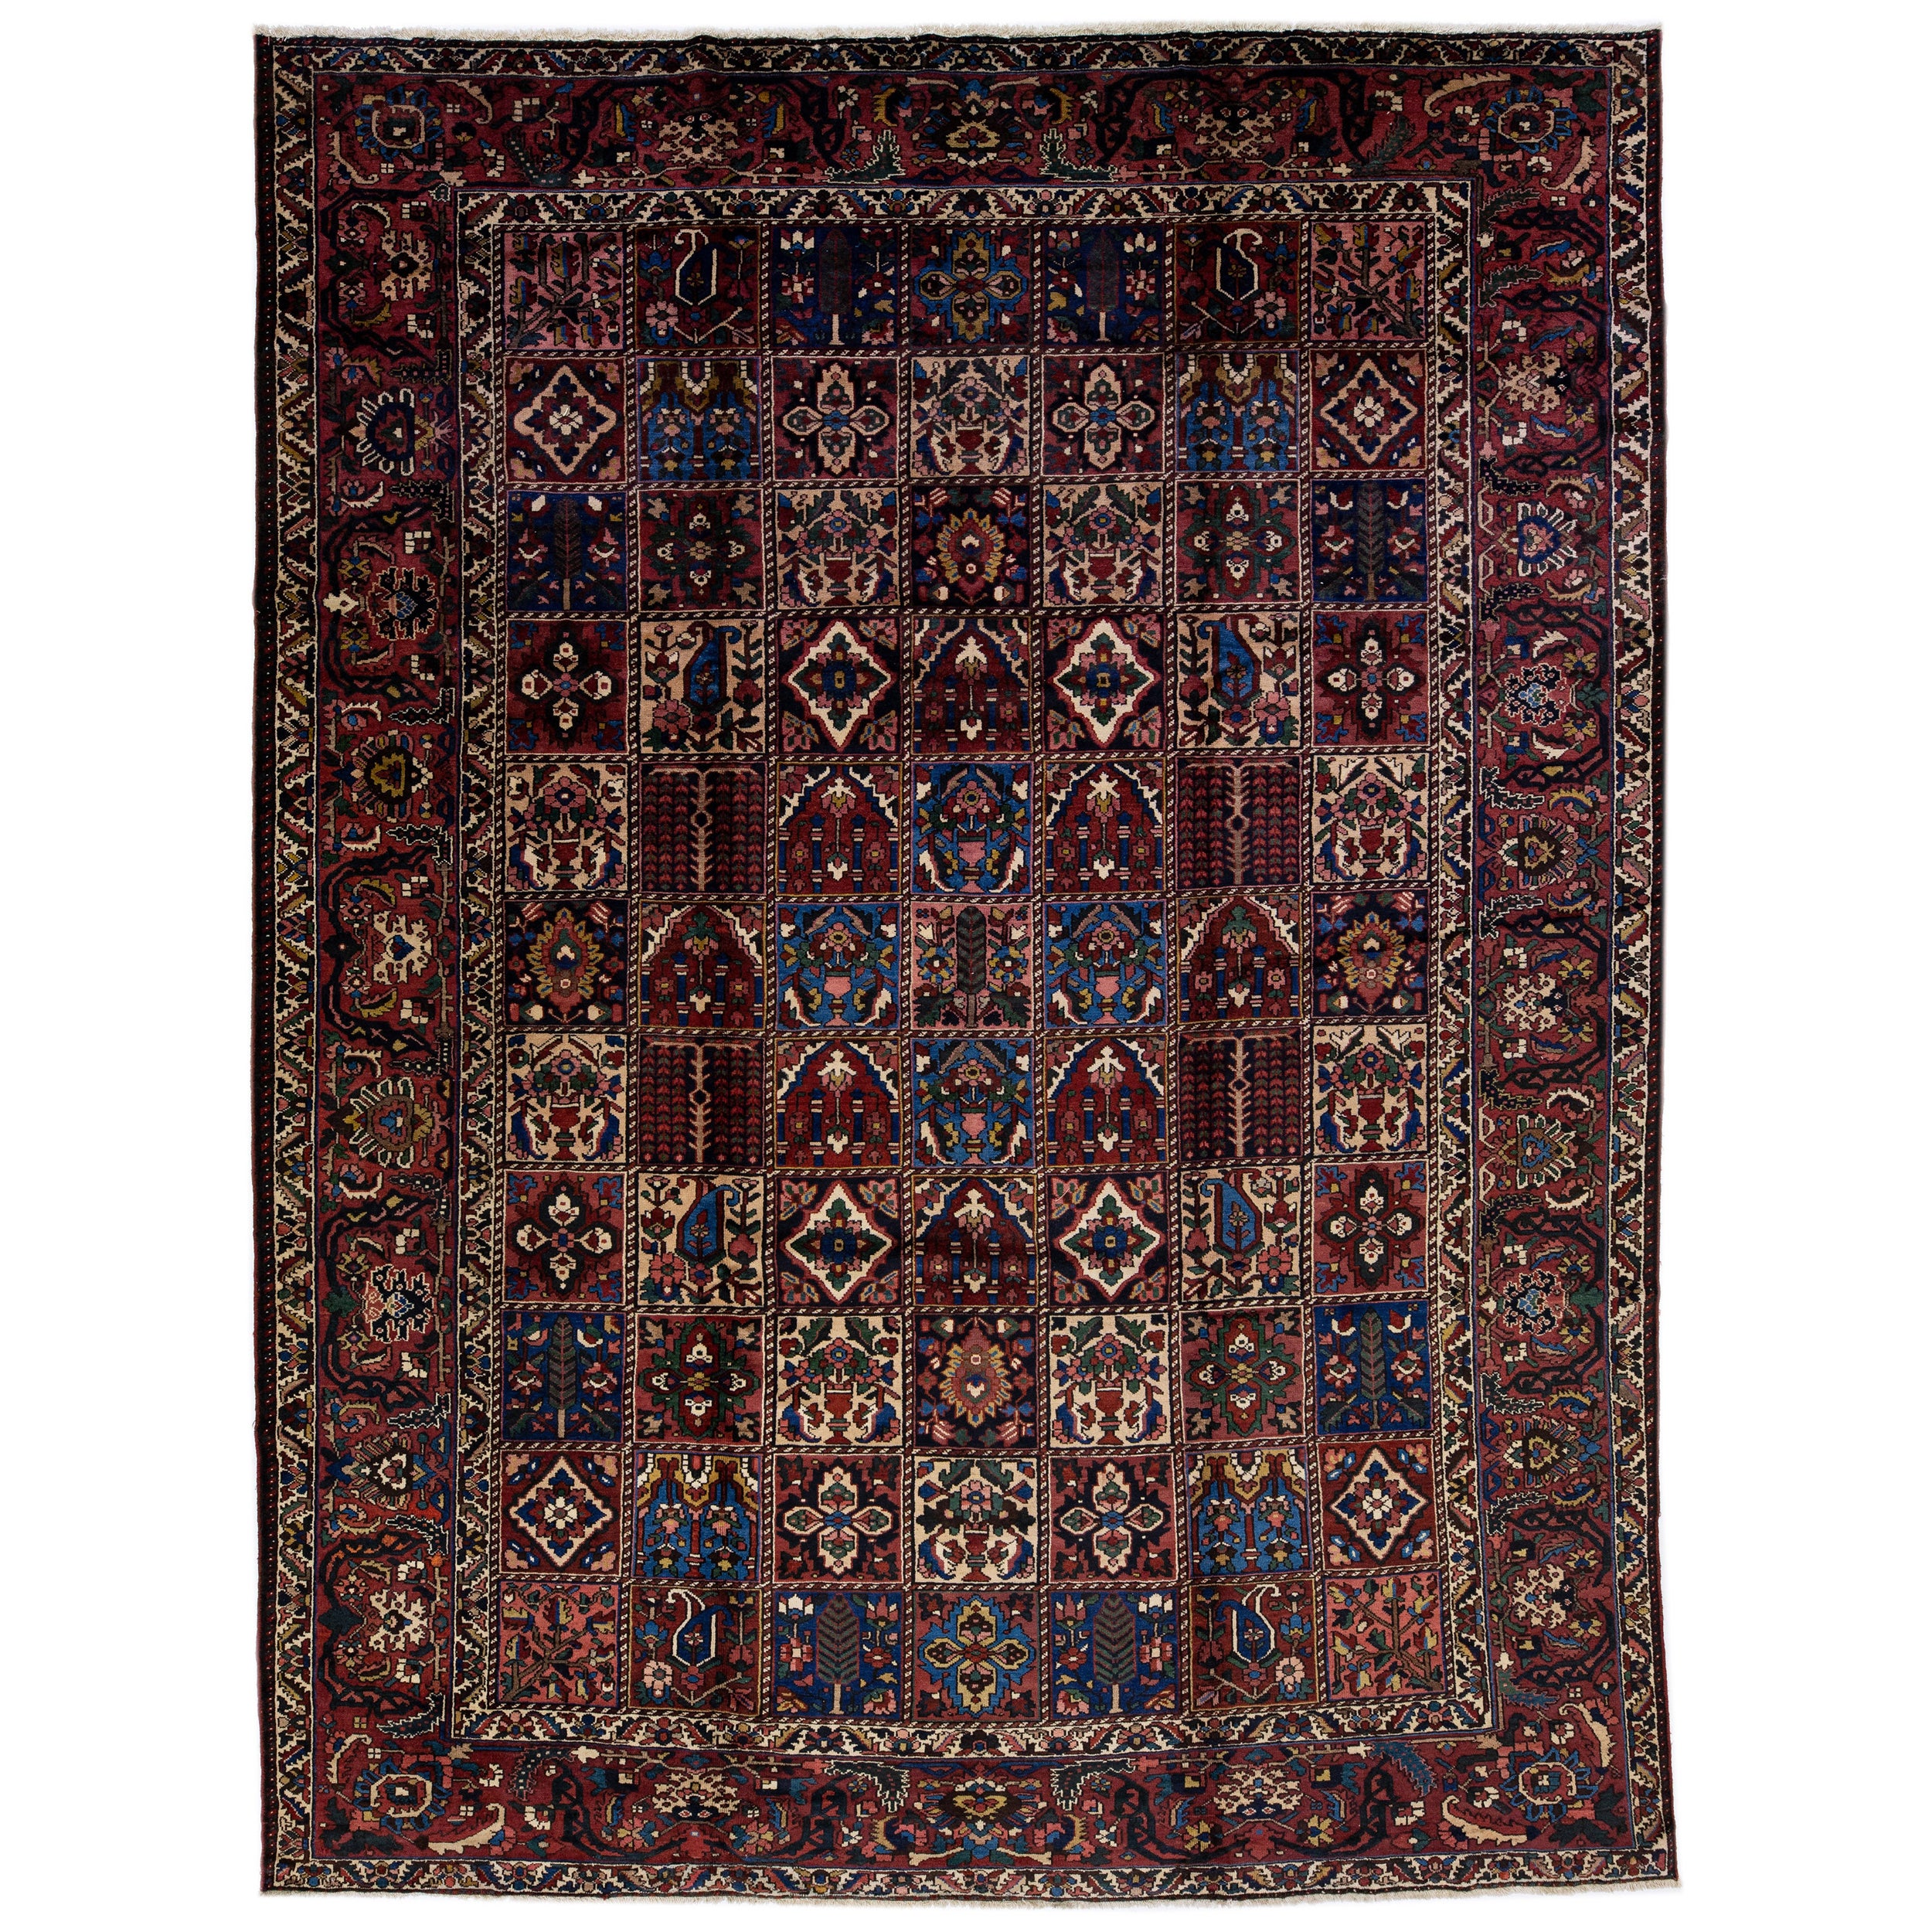 Handmade Antique Persian Bakhtiari Wool Rug with Allover Multicolor Design 